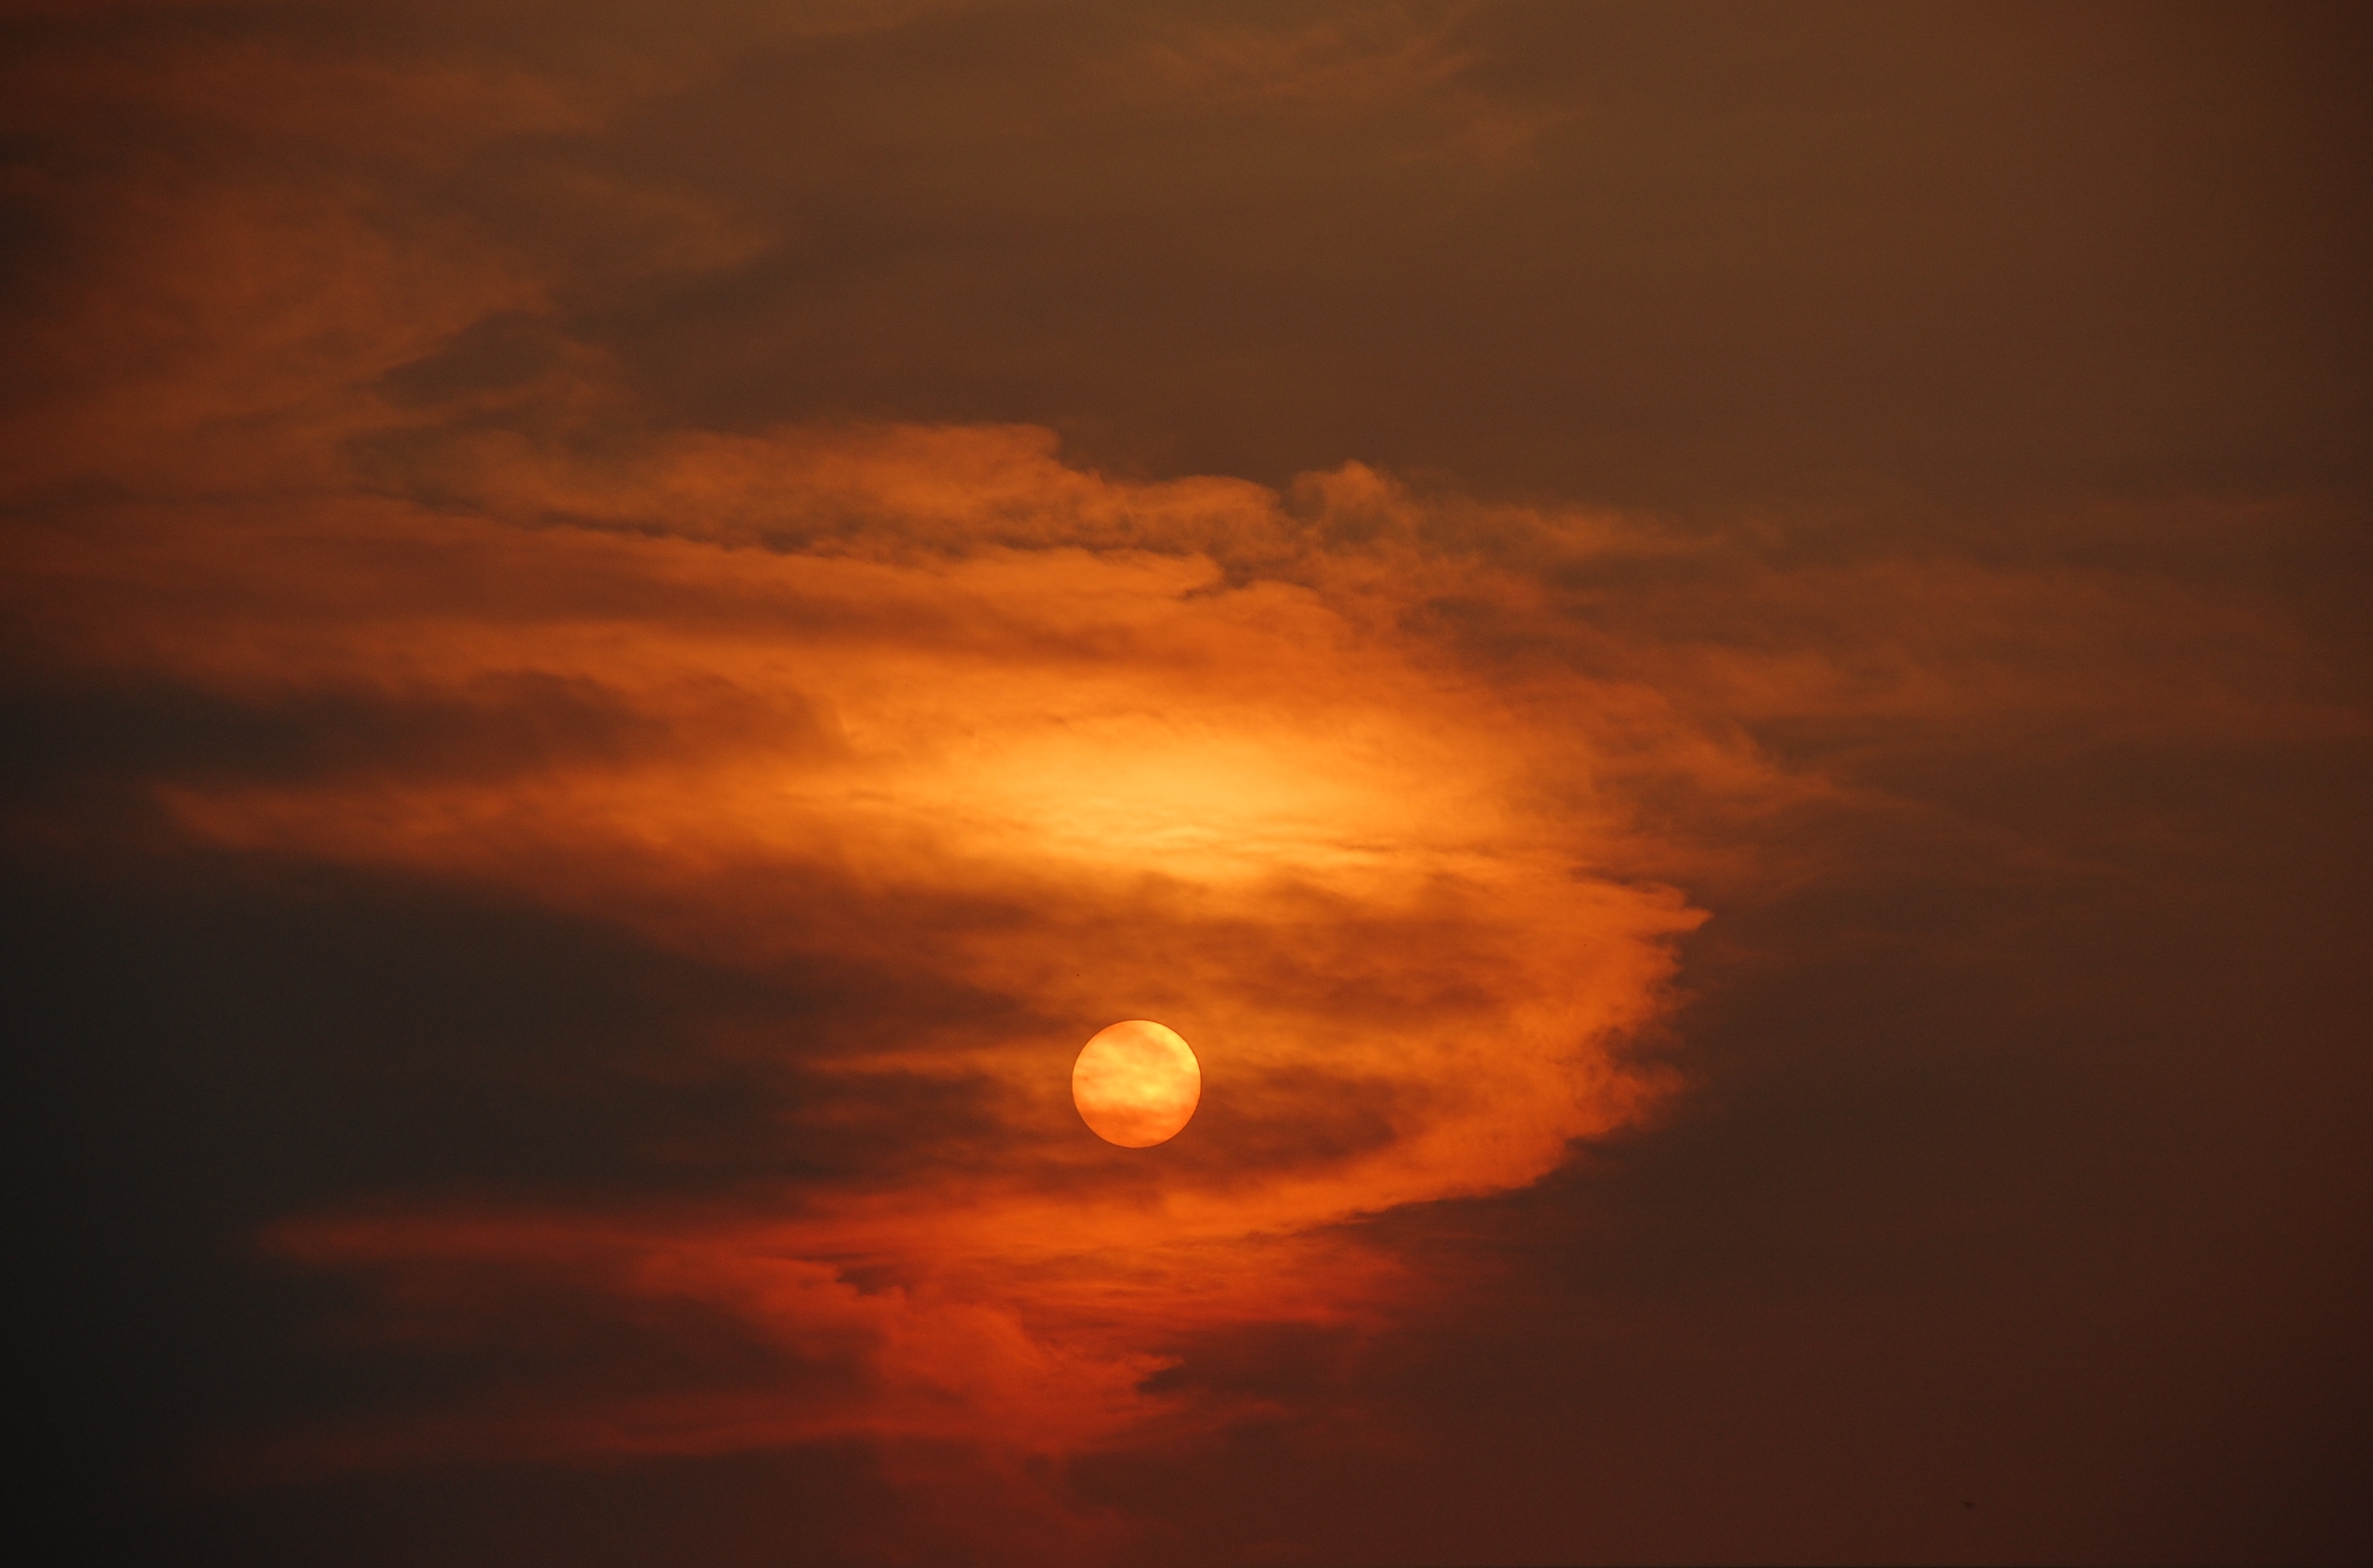  was taken at sunset during the summer 07 Utah fires in Moab UT 2937x1941